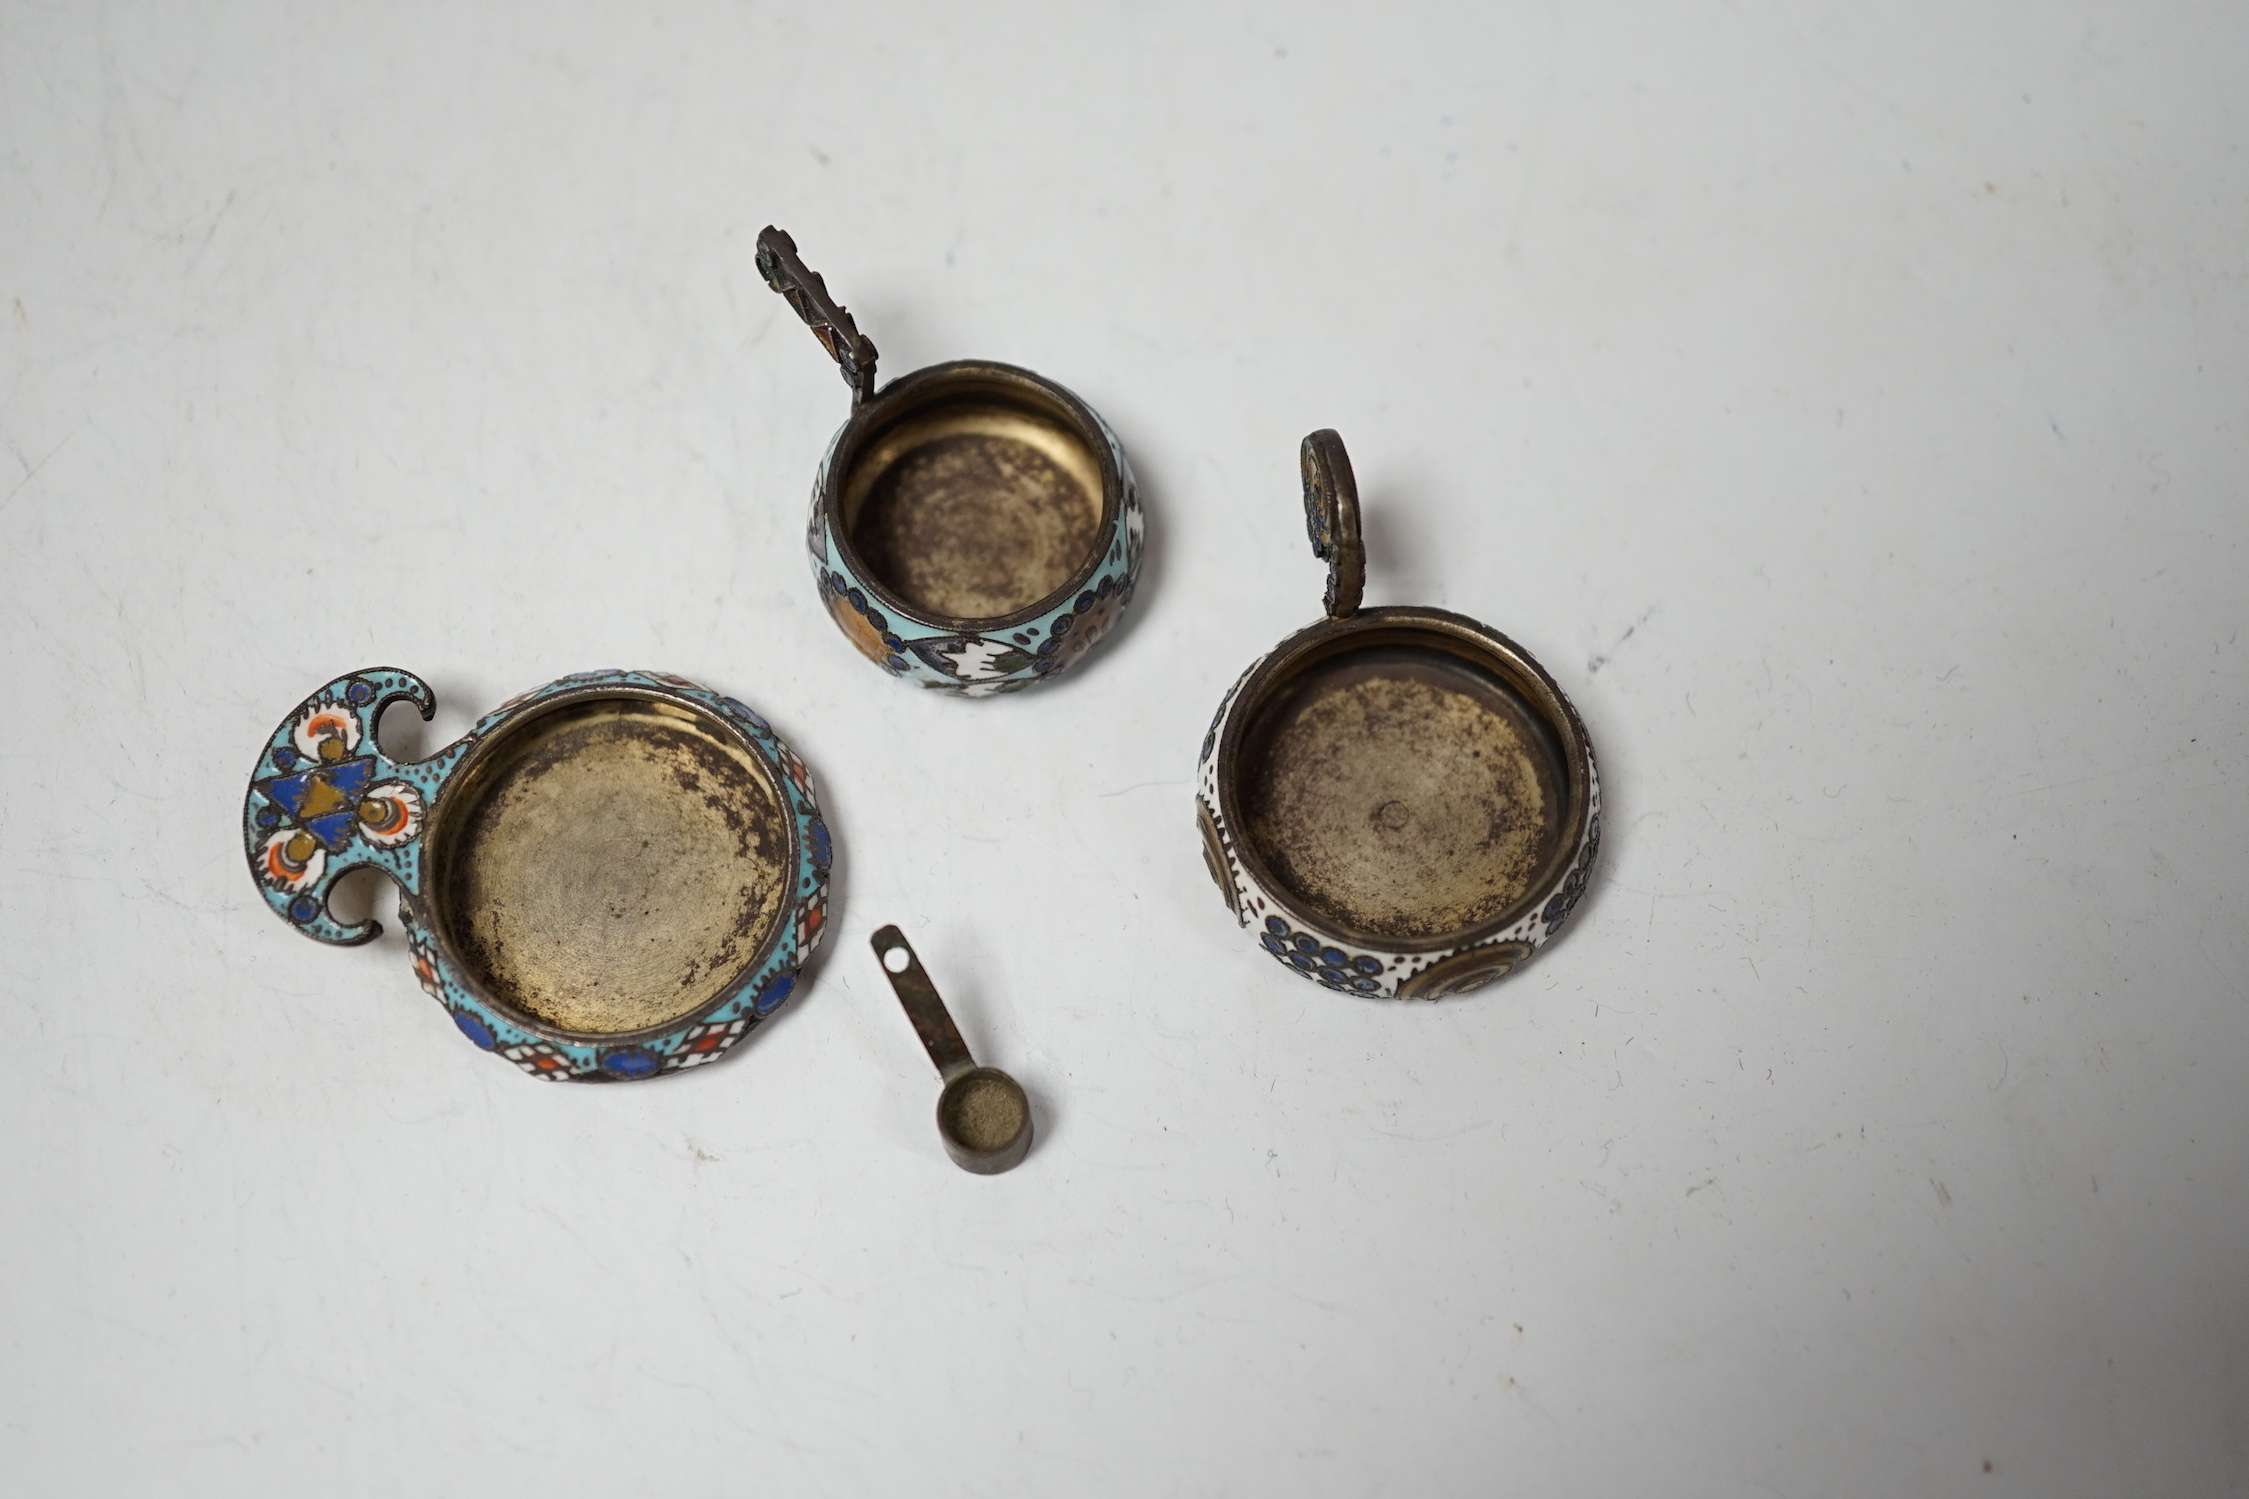 Three miniature late 19th/early 20th century Russian 88 zolotnik and cloisonné enamel single handled kovsh/dish